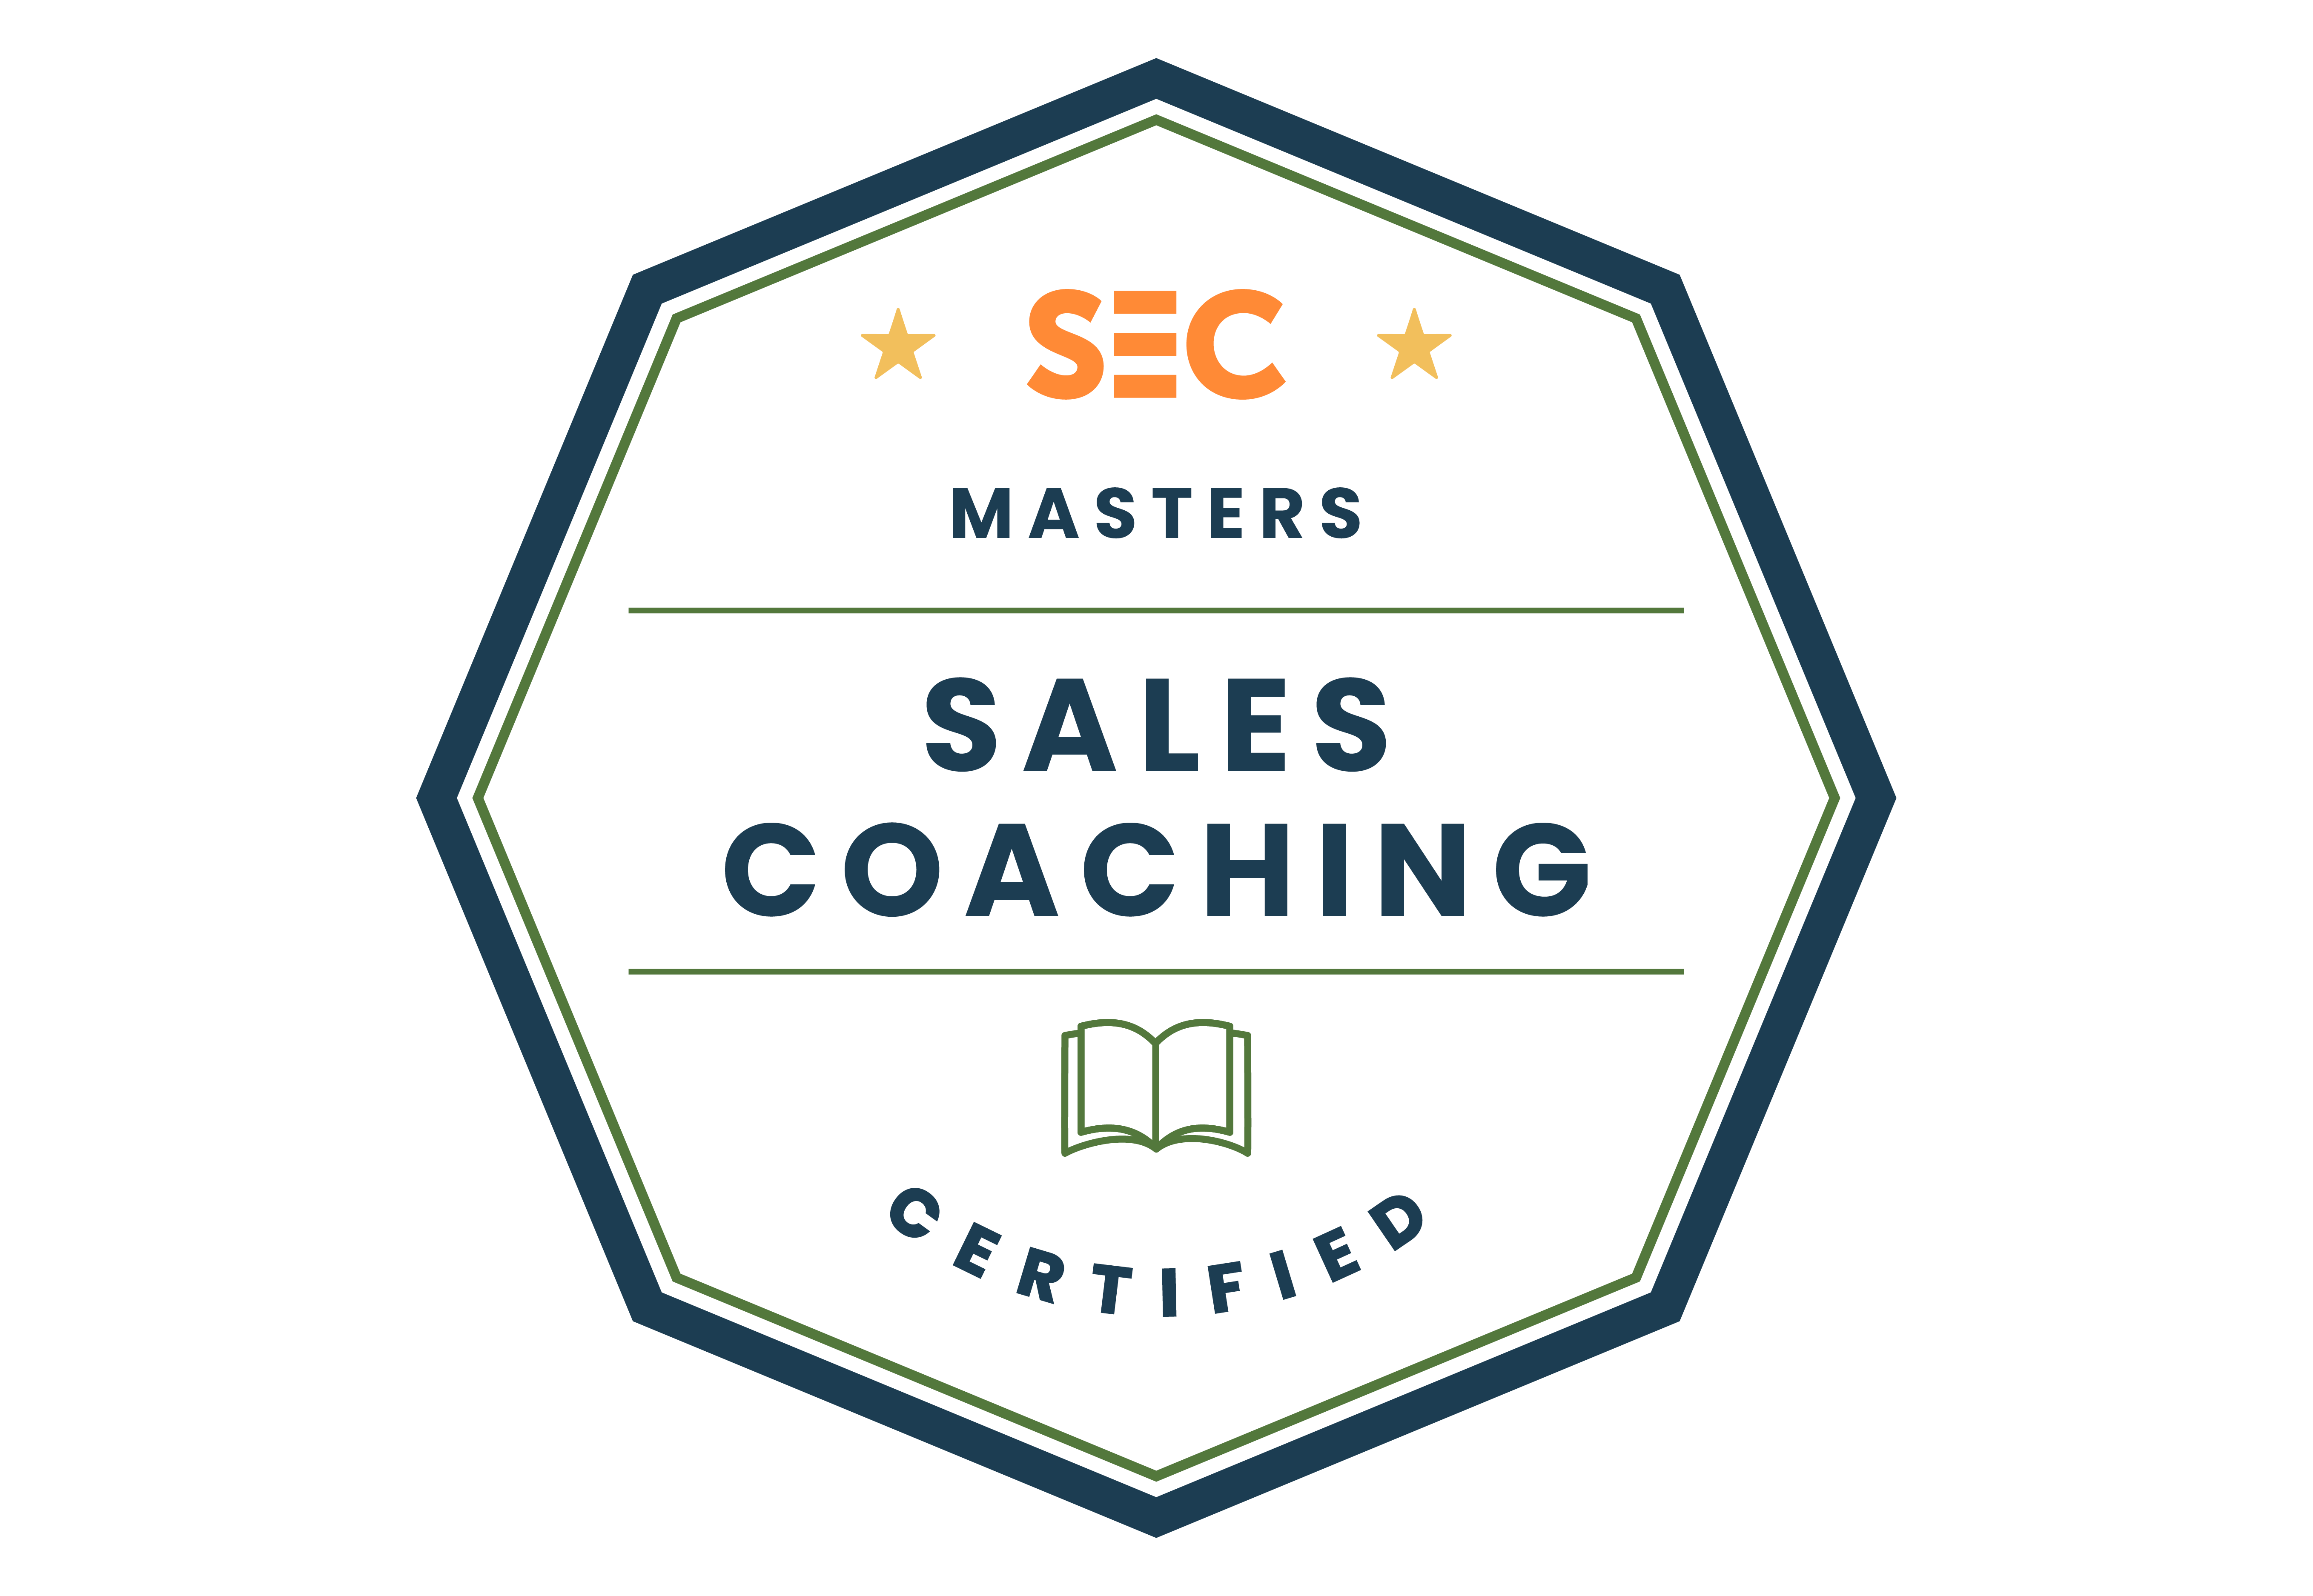 Sales Coaching Certified | Masters badge